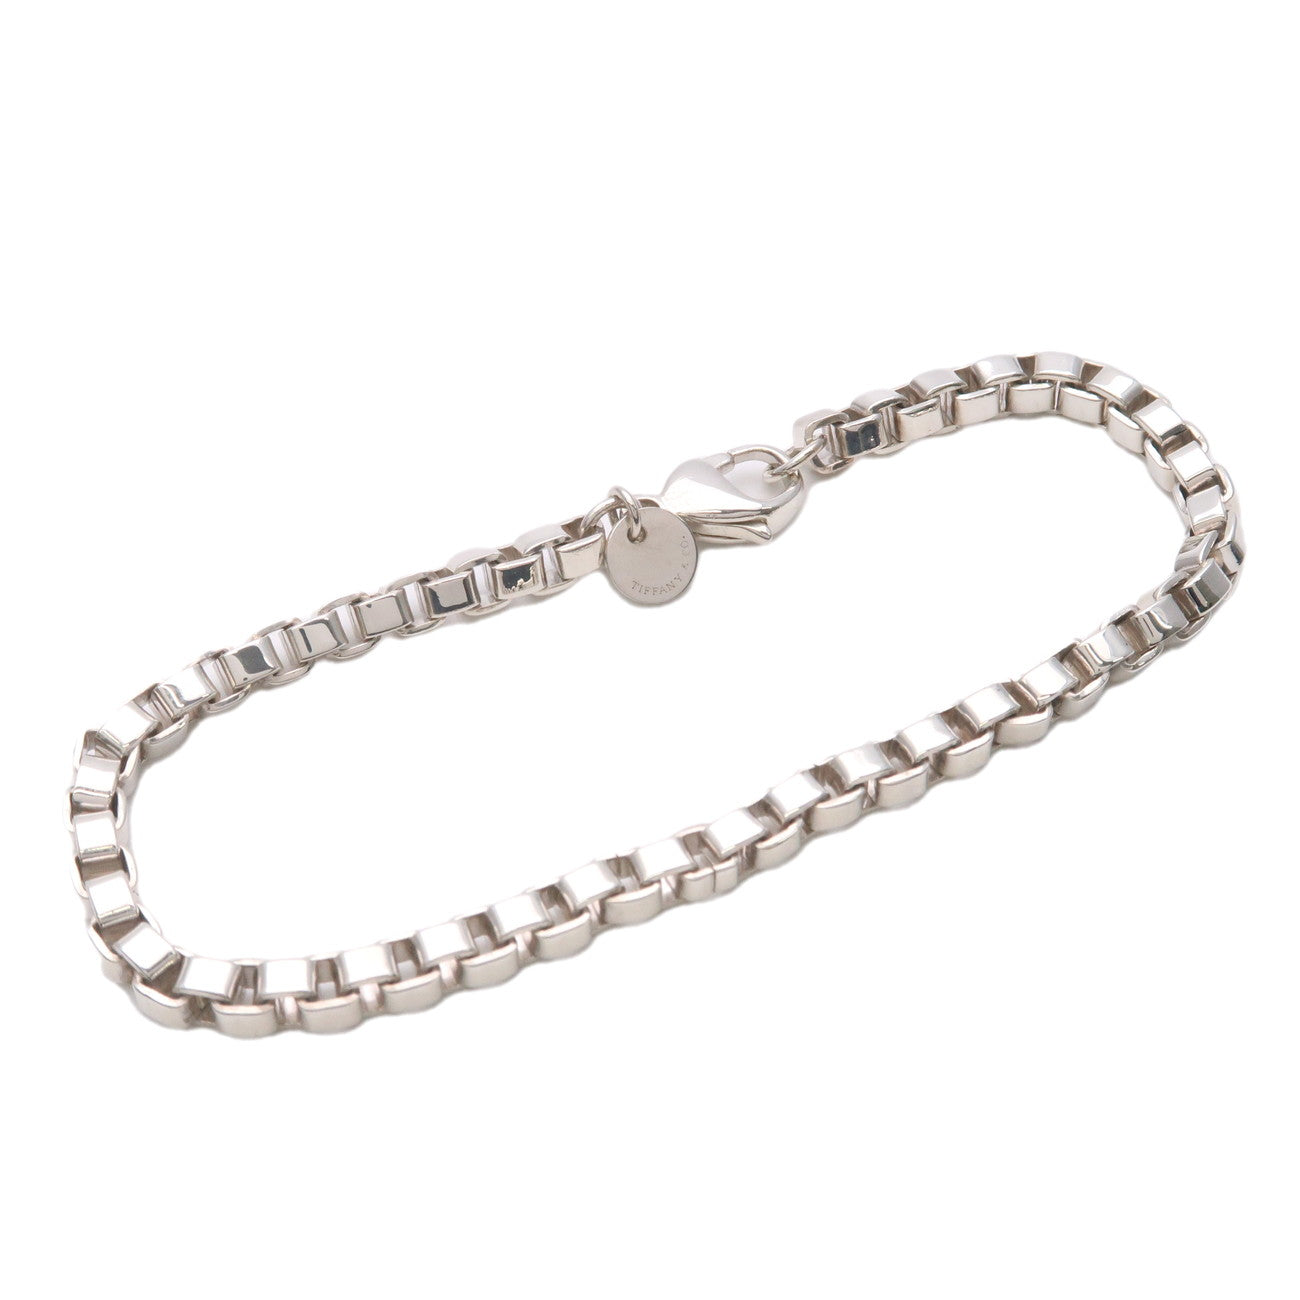 Tiffany&Co. Tiffany Venetian Link Bracelet SV925 Silver